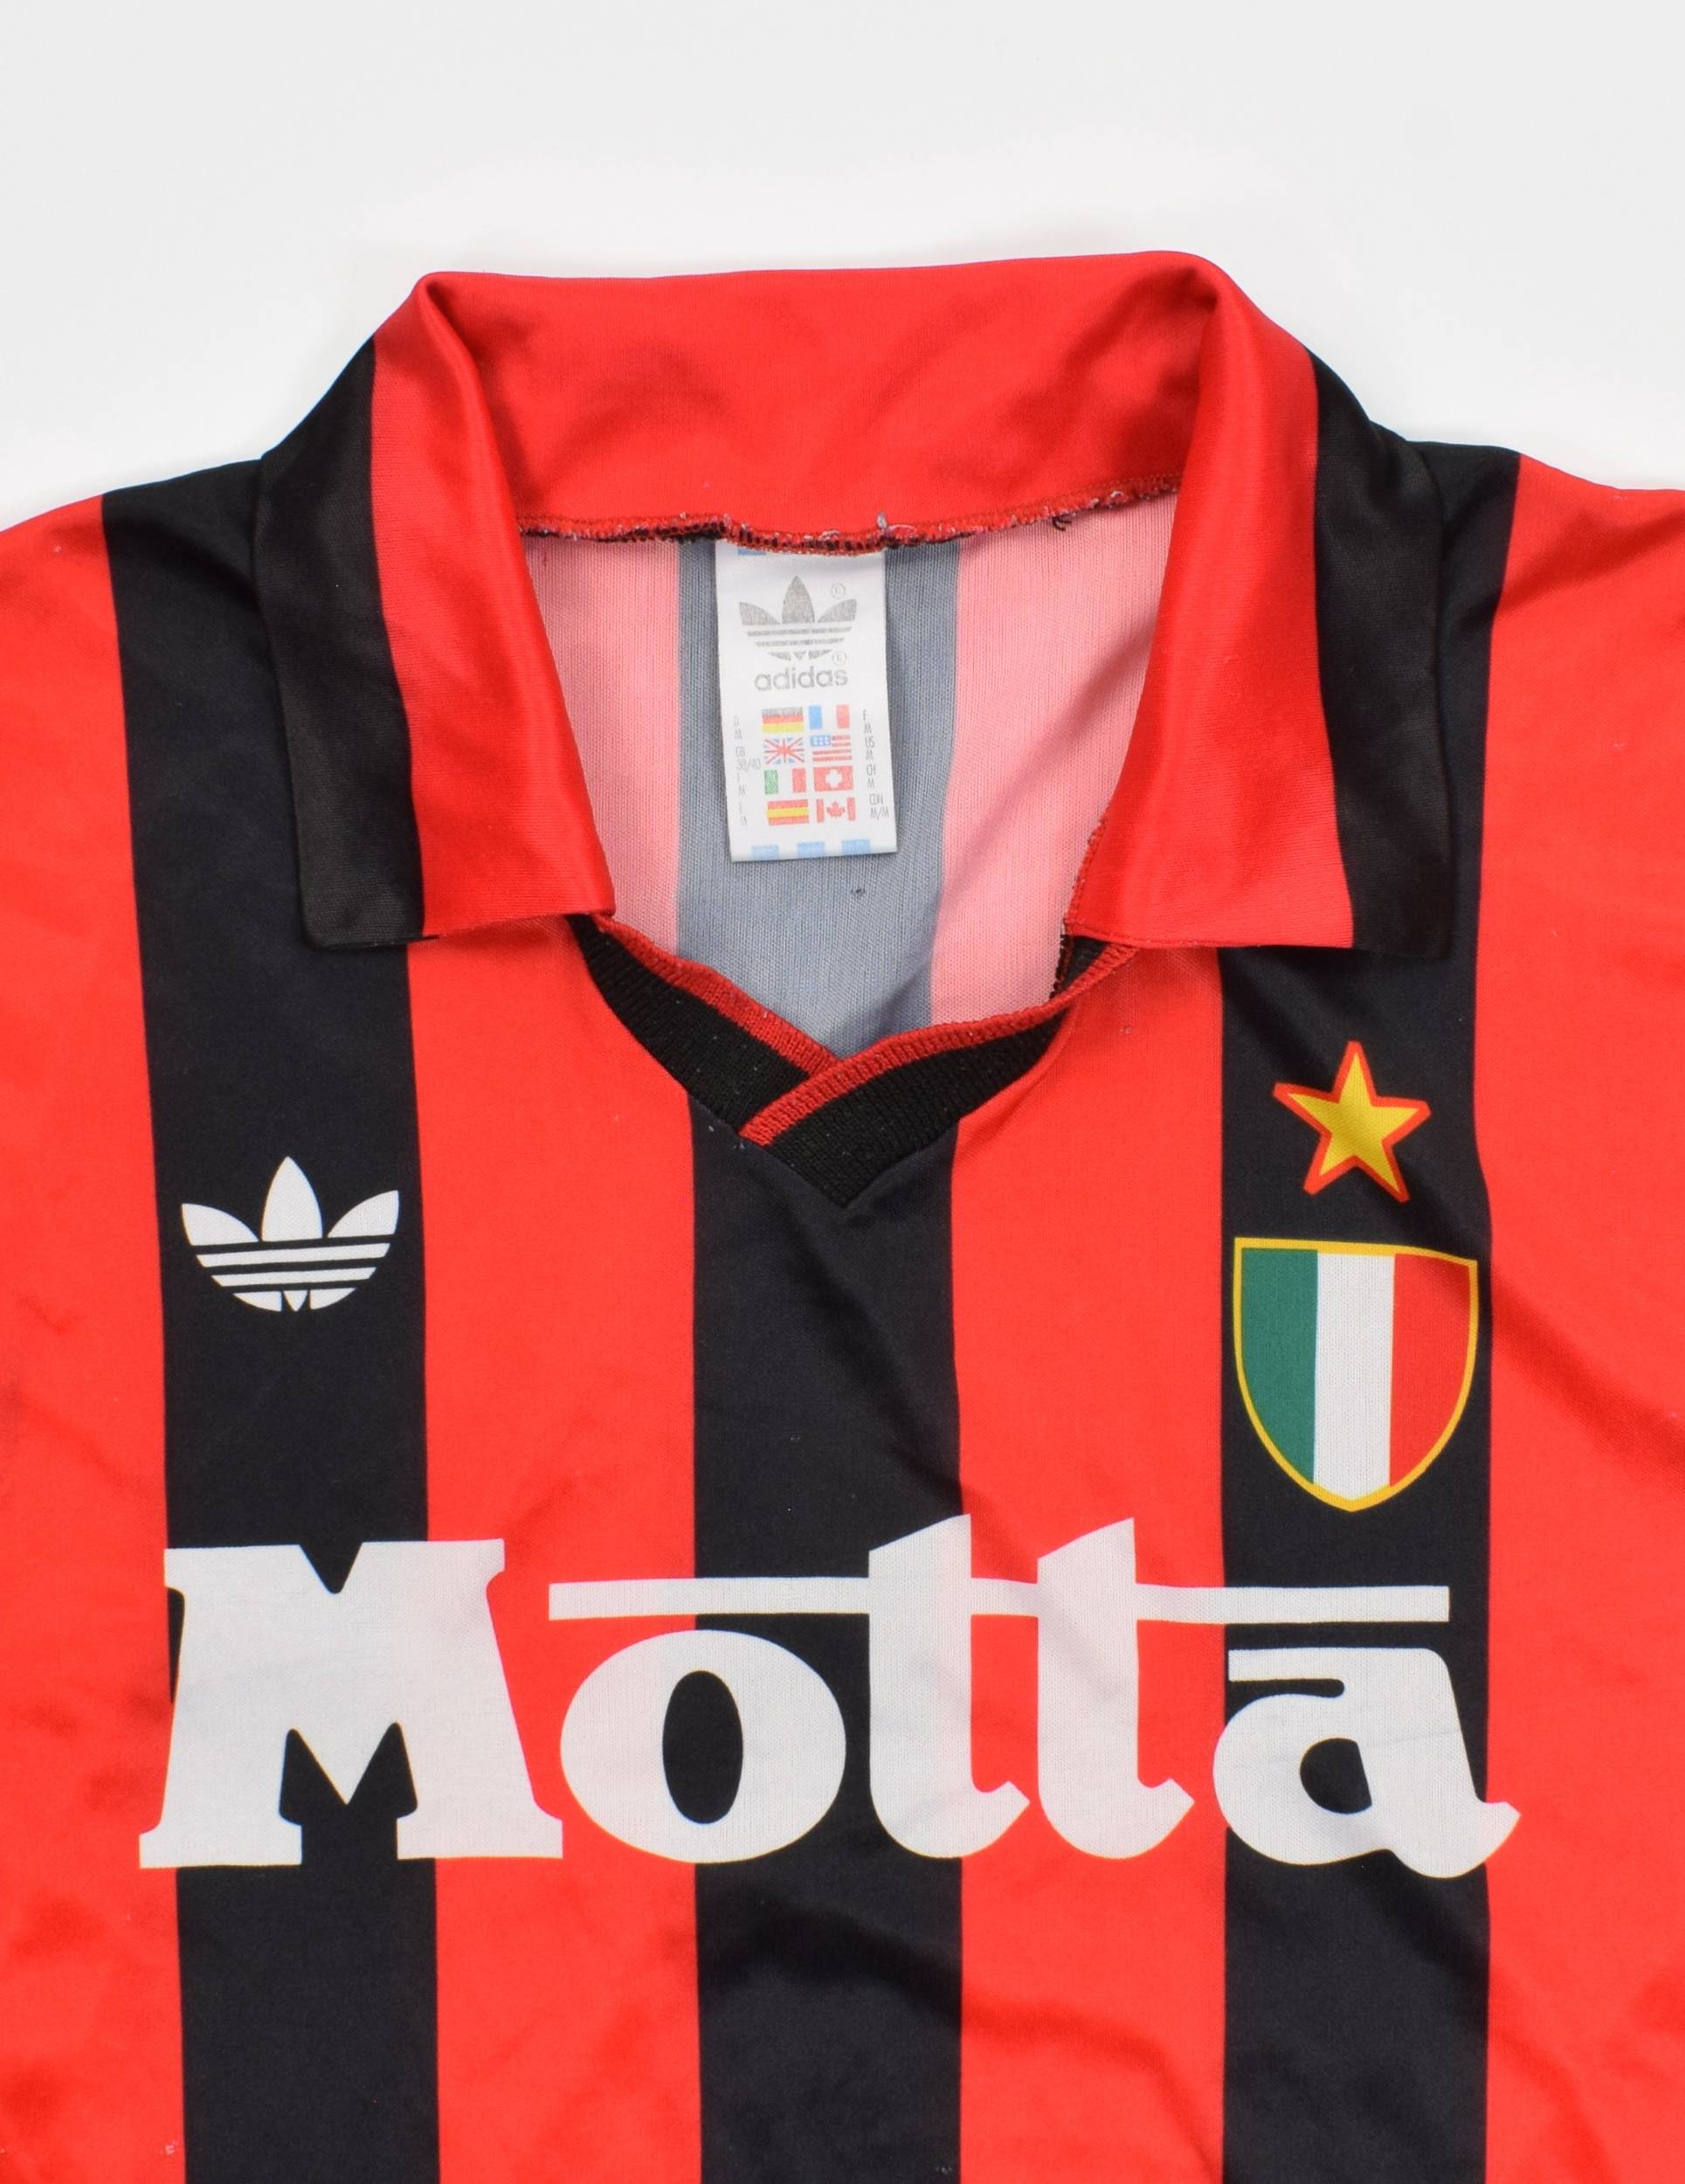  Milan A.C. 1992-93. Motta sponsor ufficiale.: N.A.